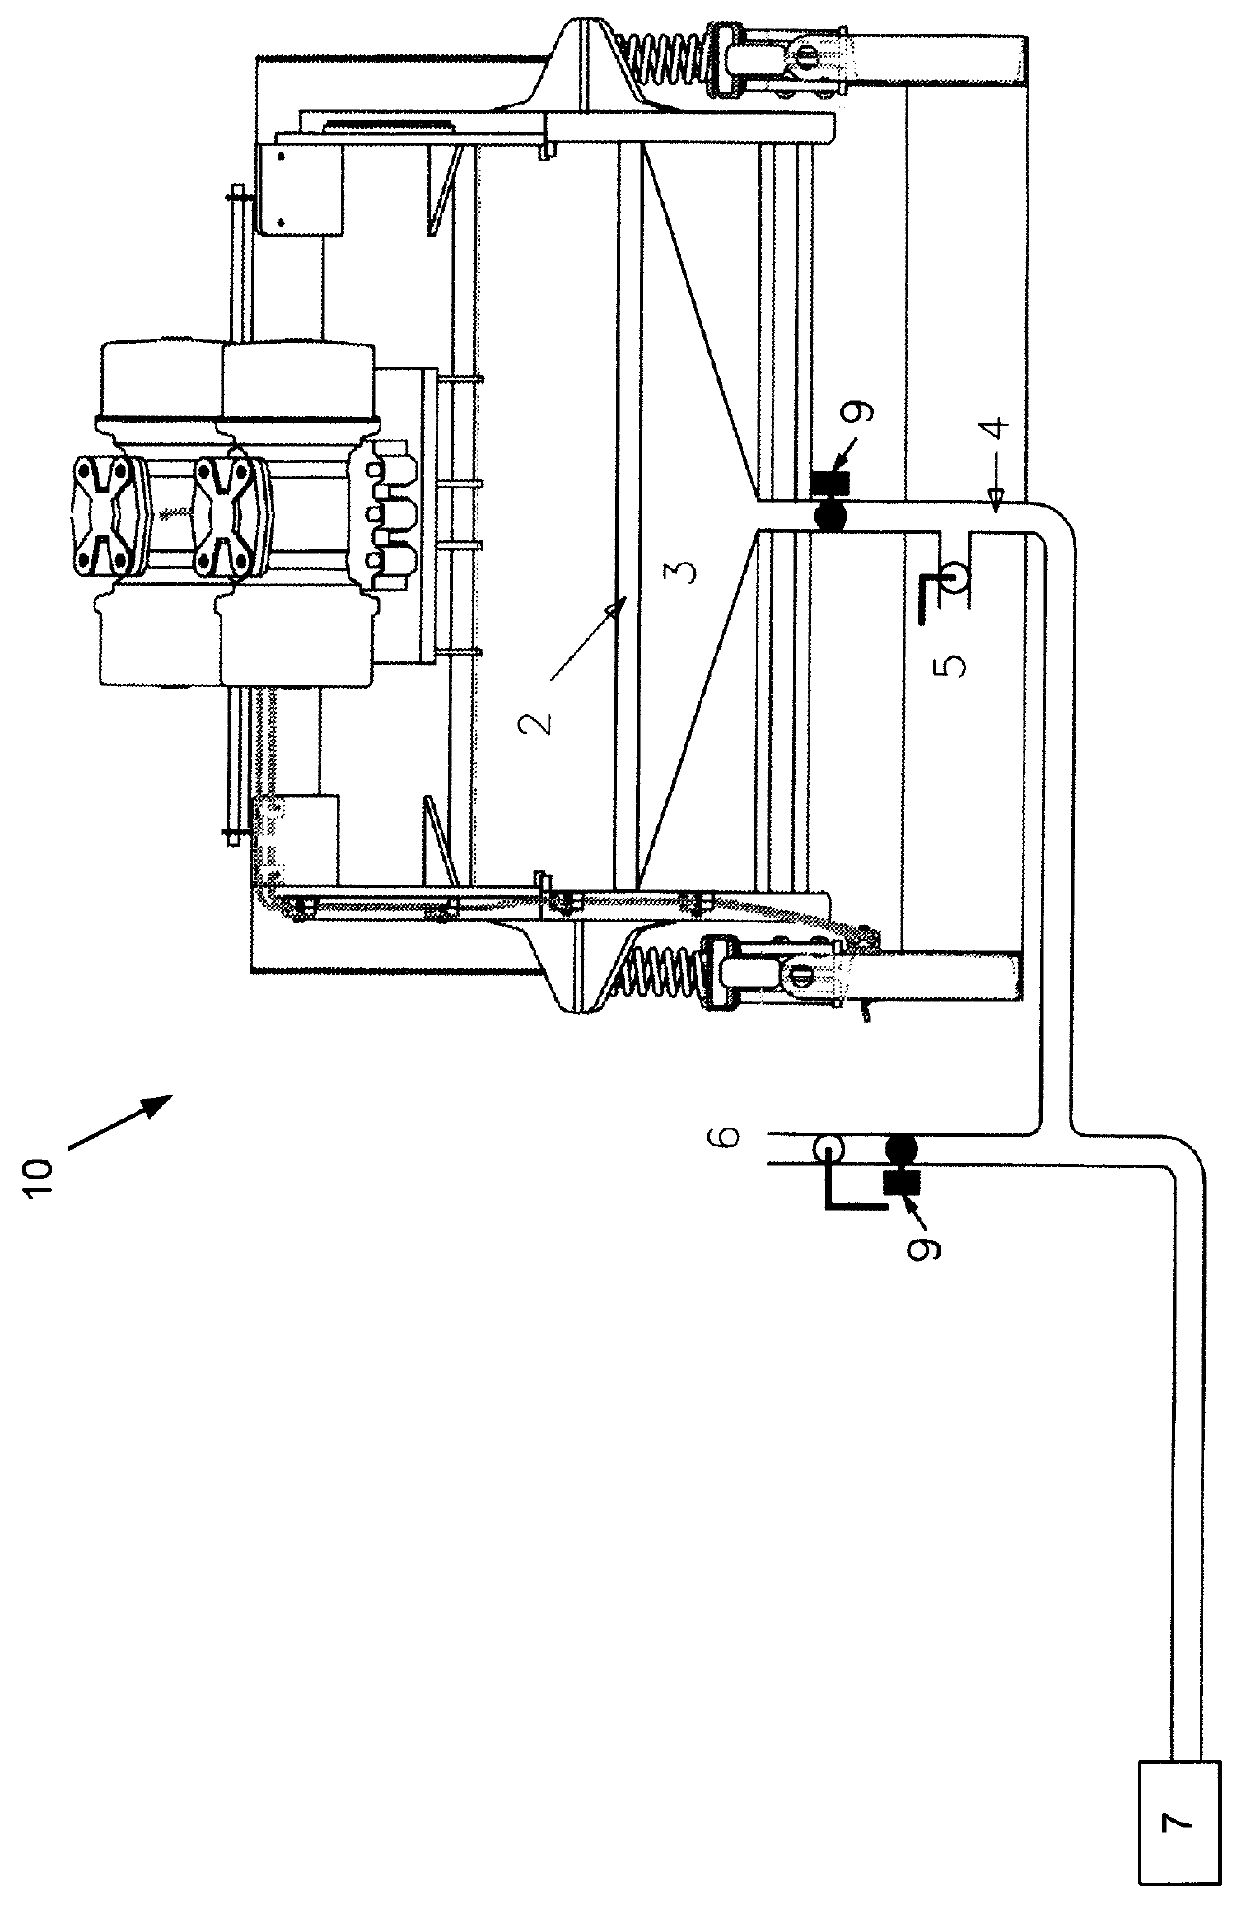 Vacuum shaker systems